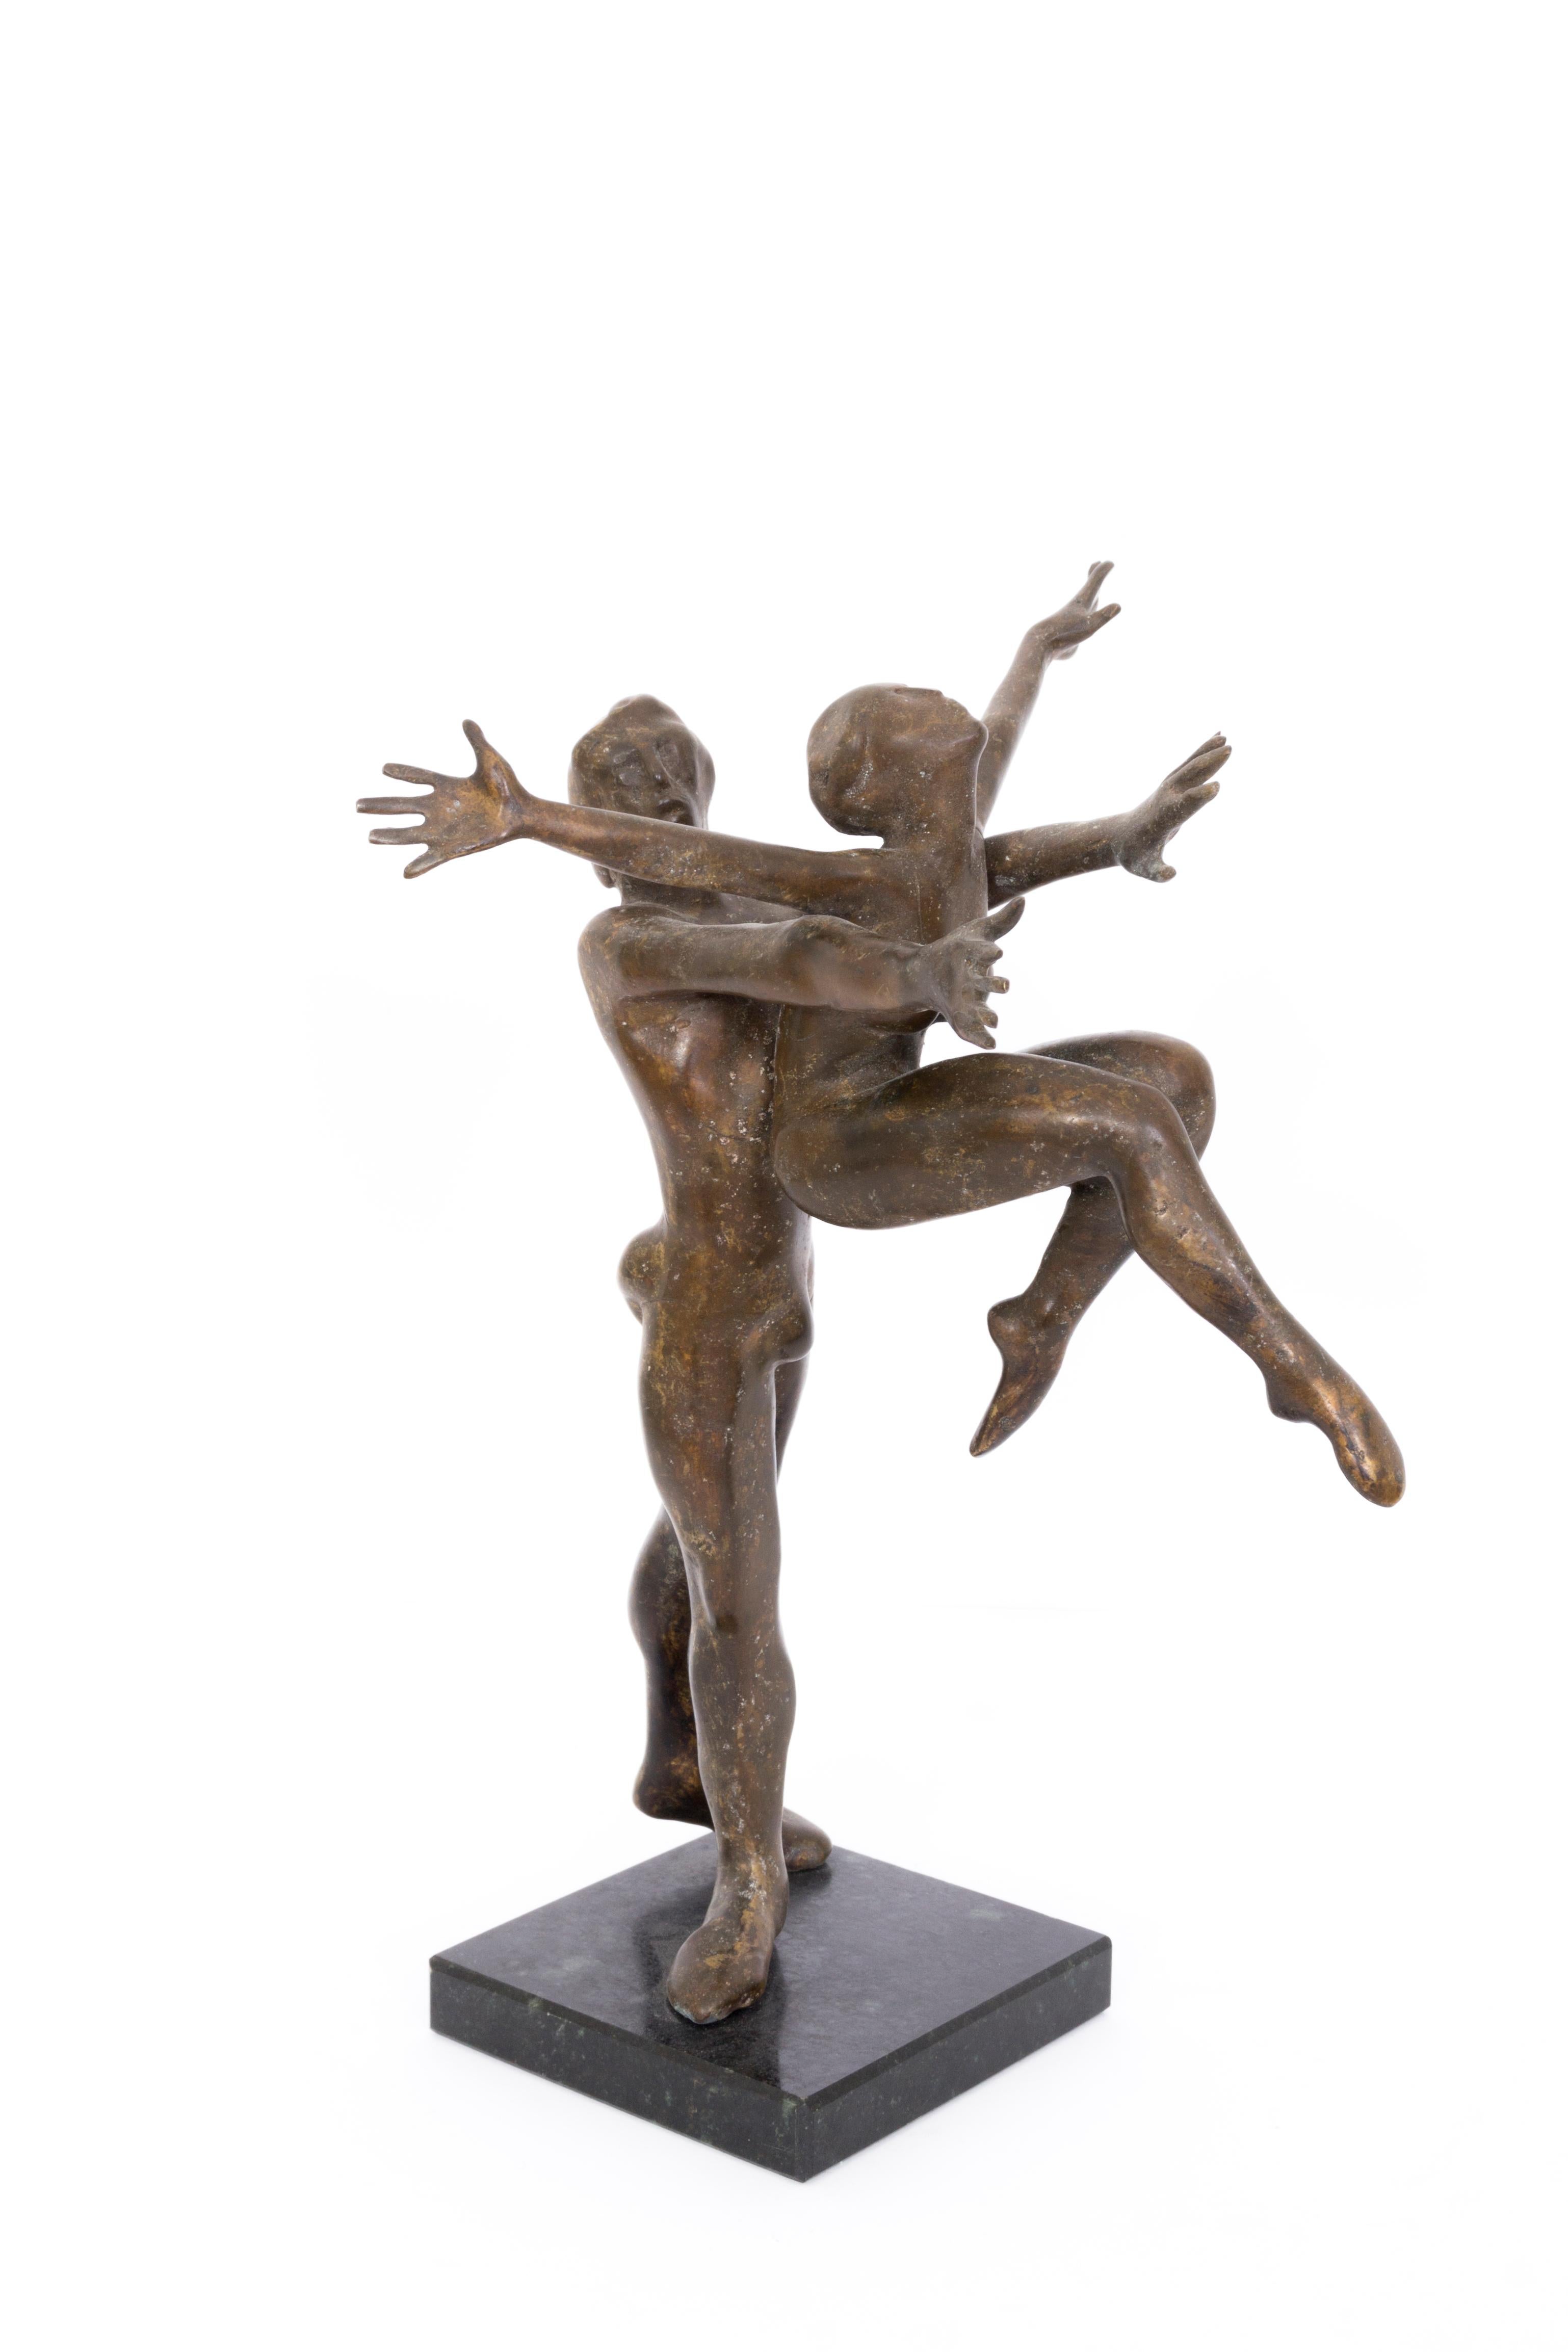 John W. Mills Figurative Sculpture - Bob Fosse